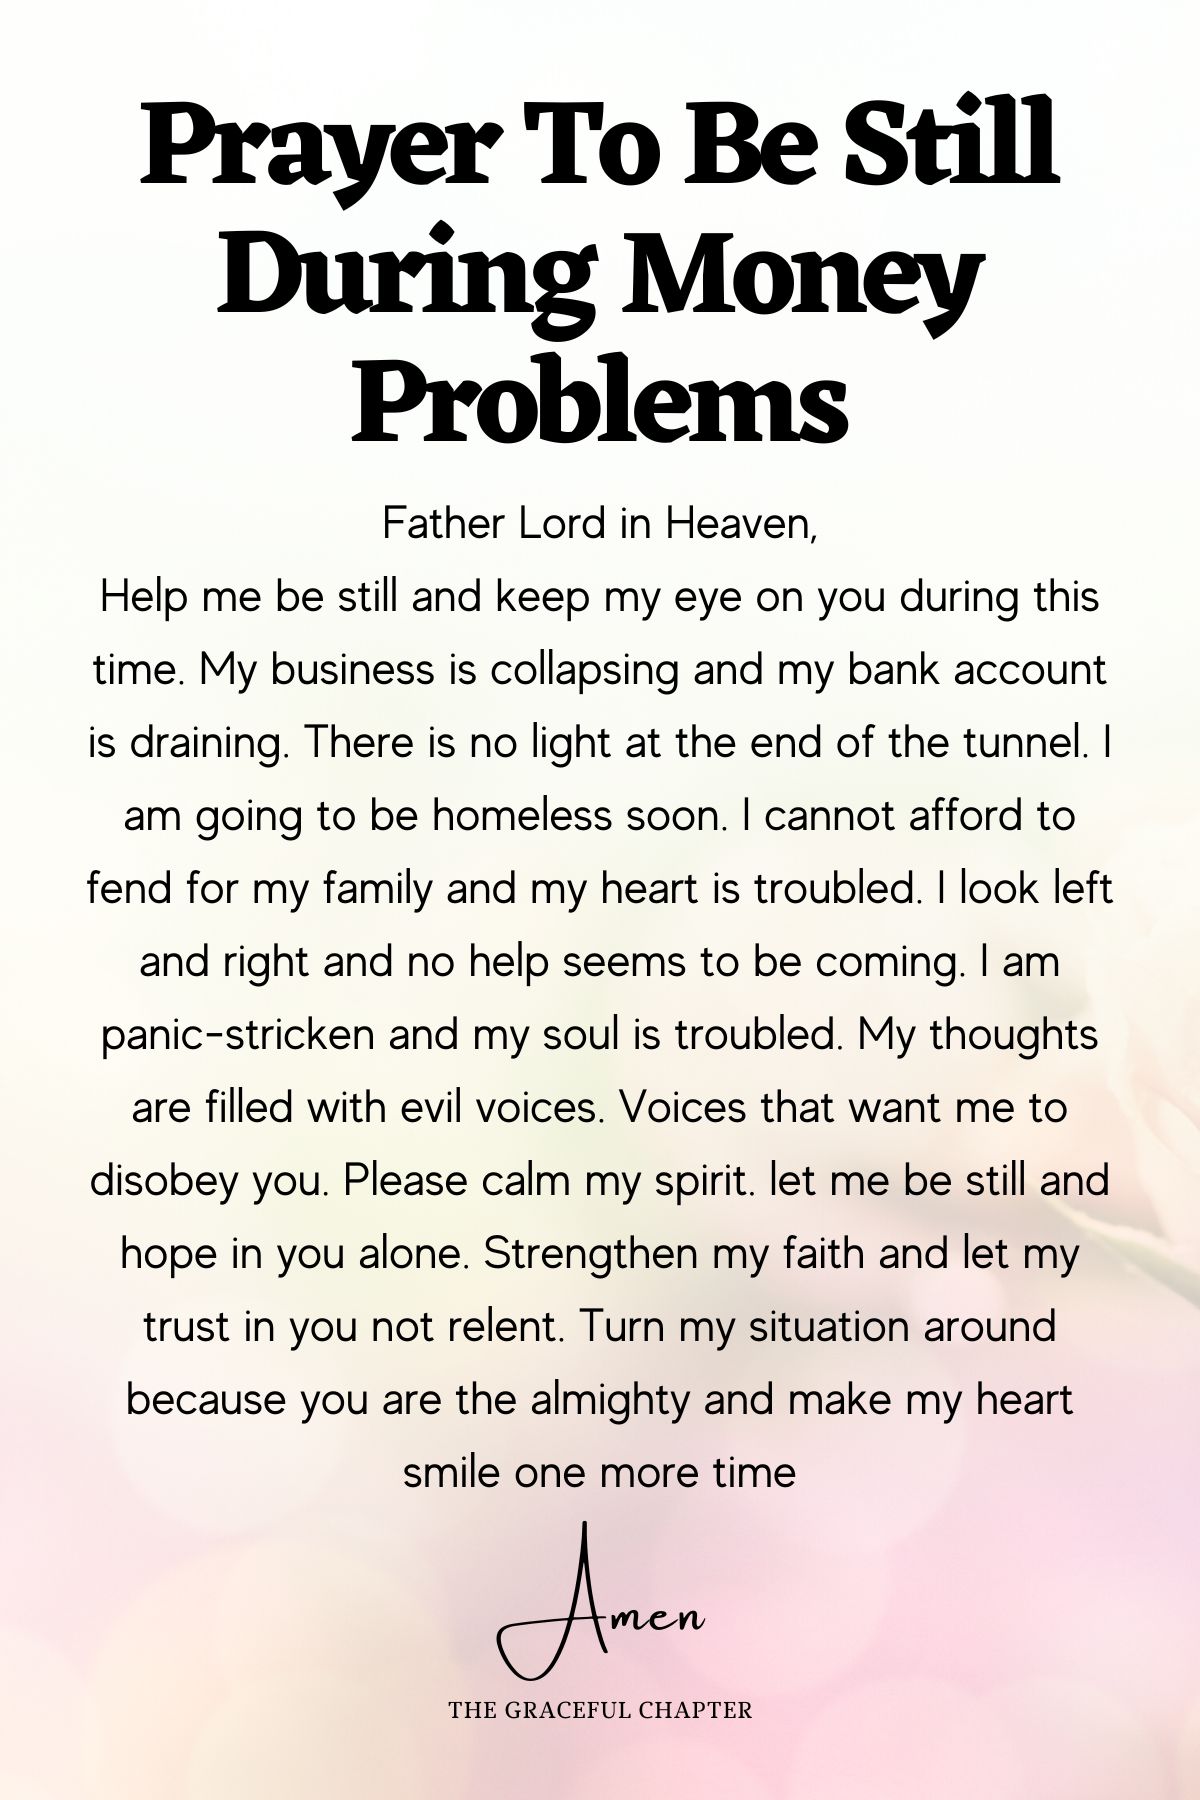 Prayer To Be still during money problems